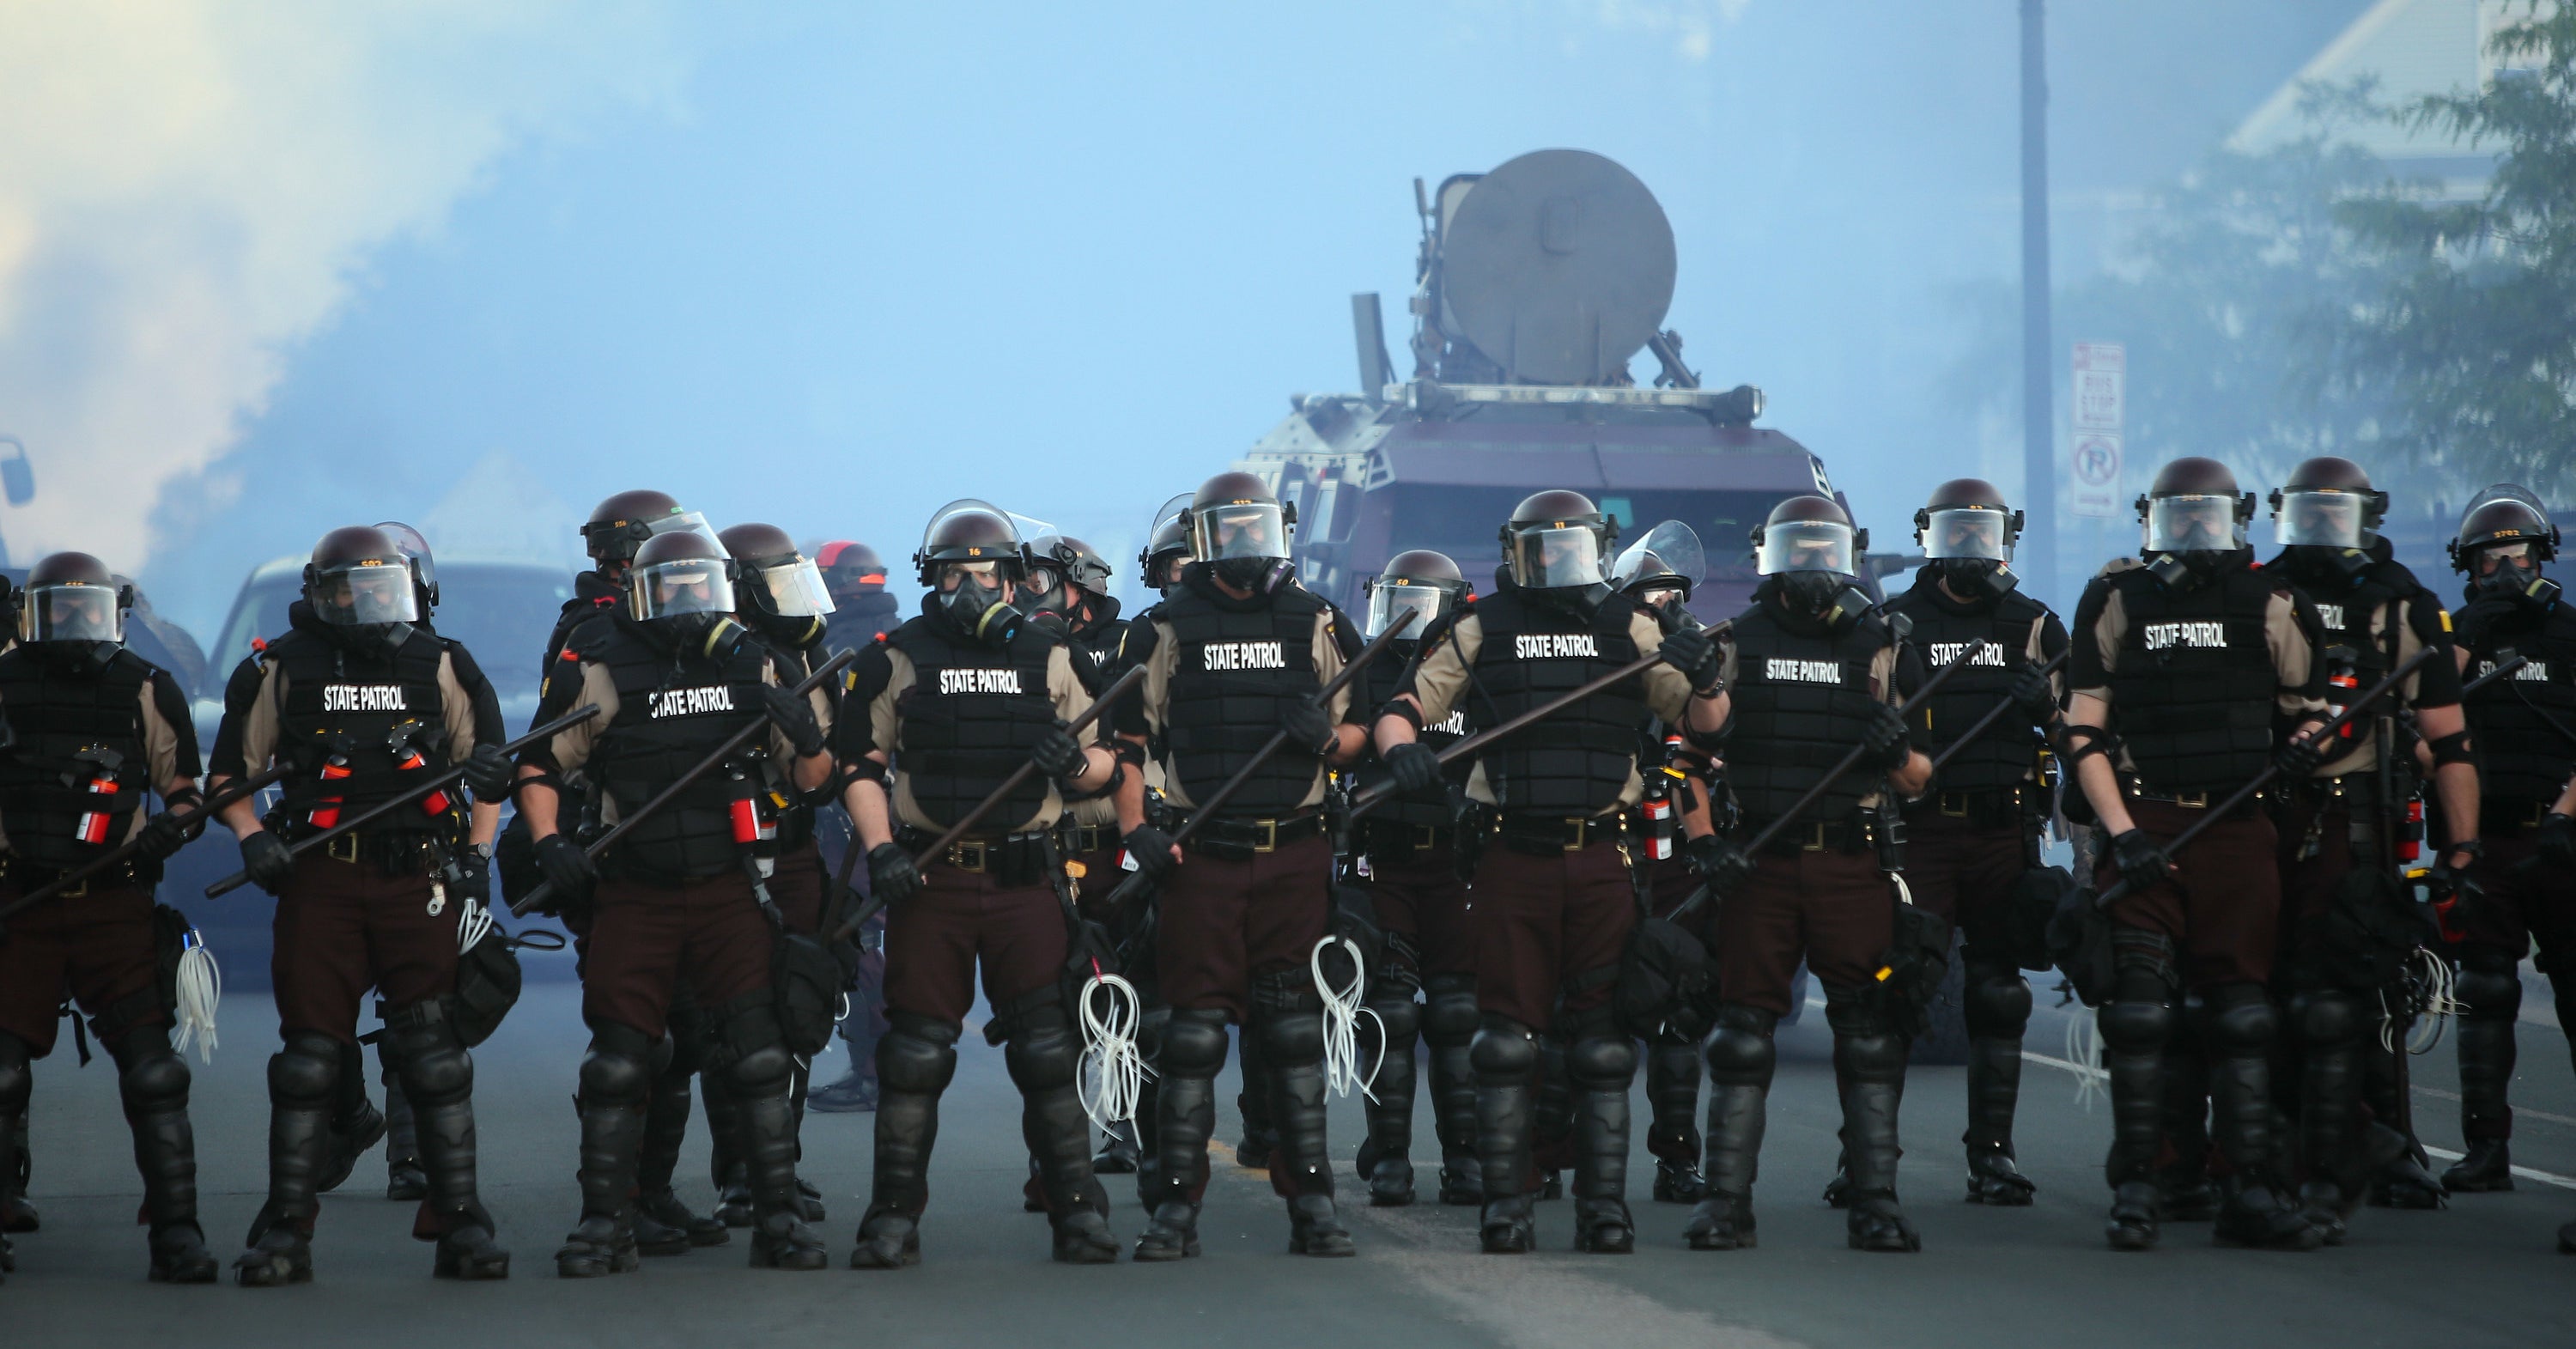 Law Enforcement, Military & Public Safety Gear